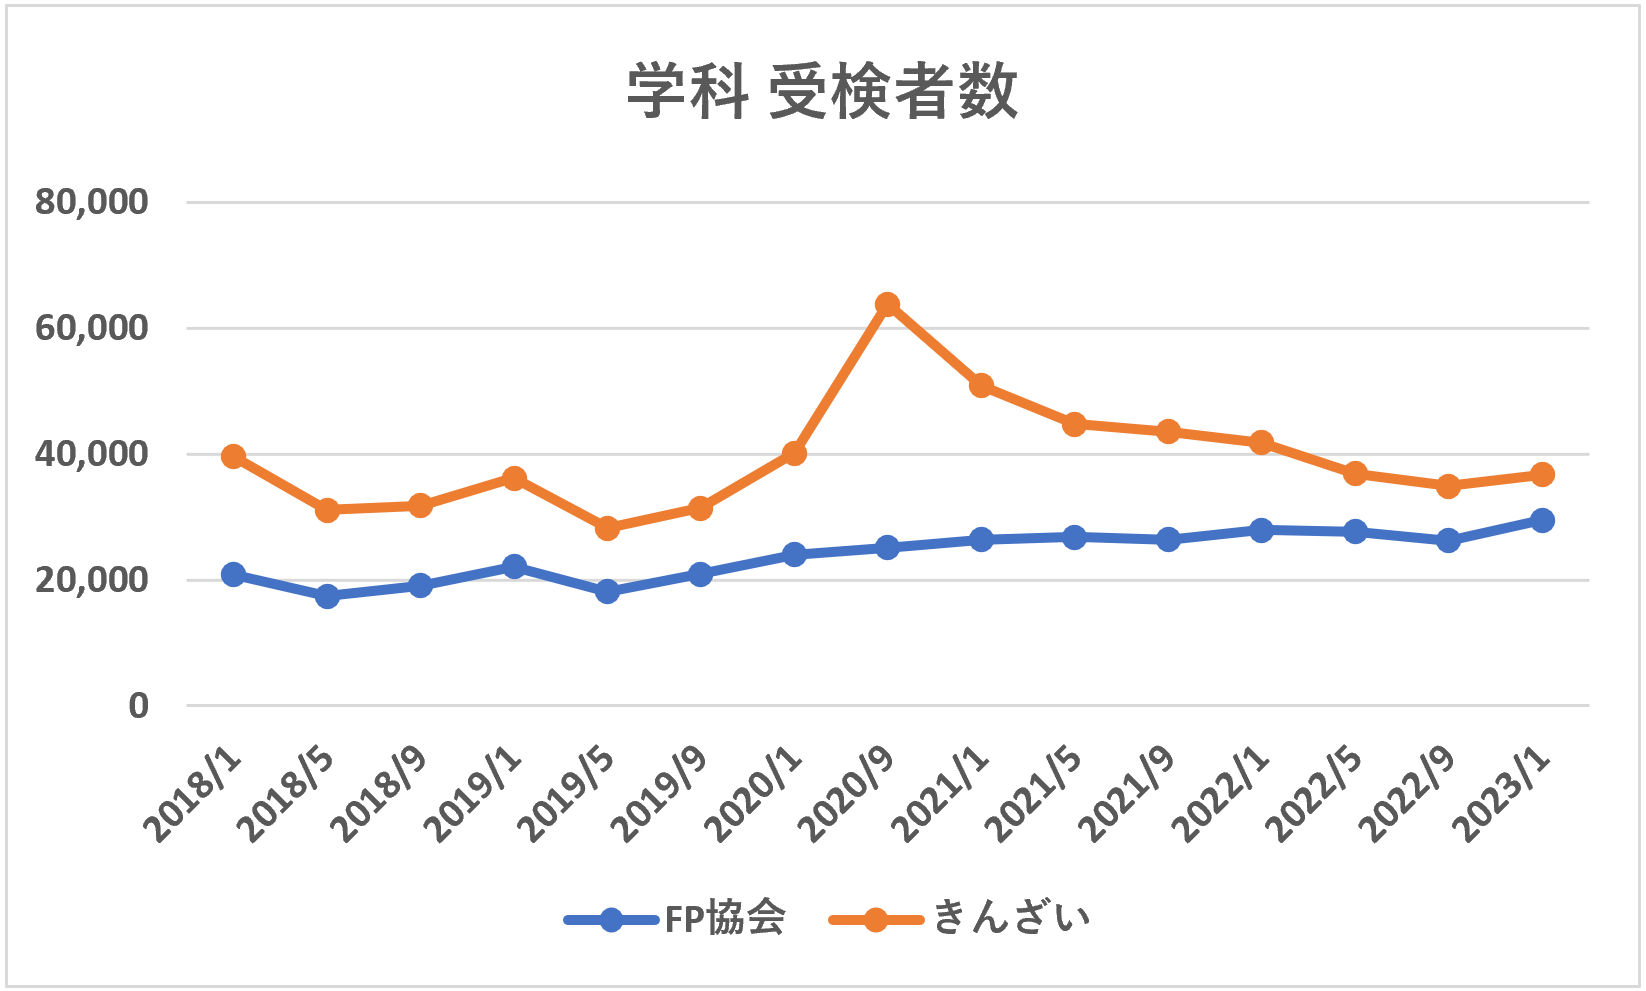 FP2級学科試験受検者数推移（2018年1月から2023年1月まで）